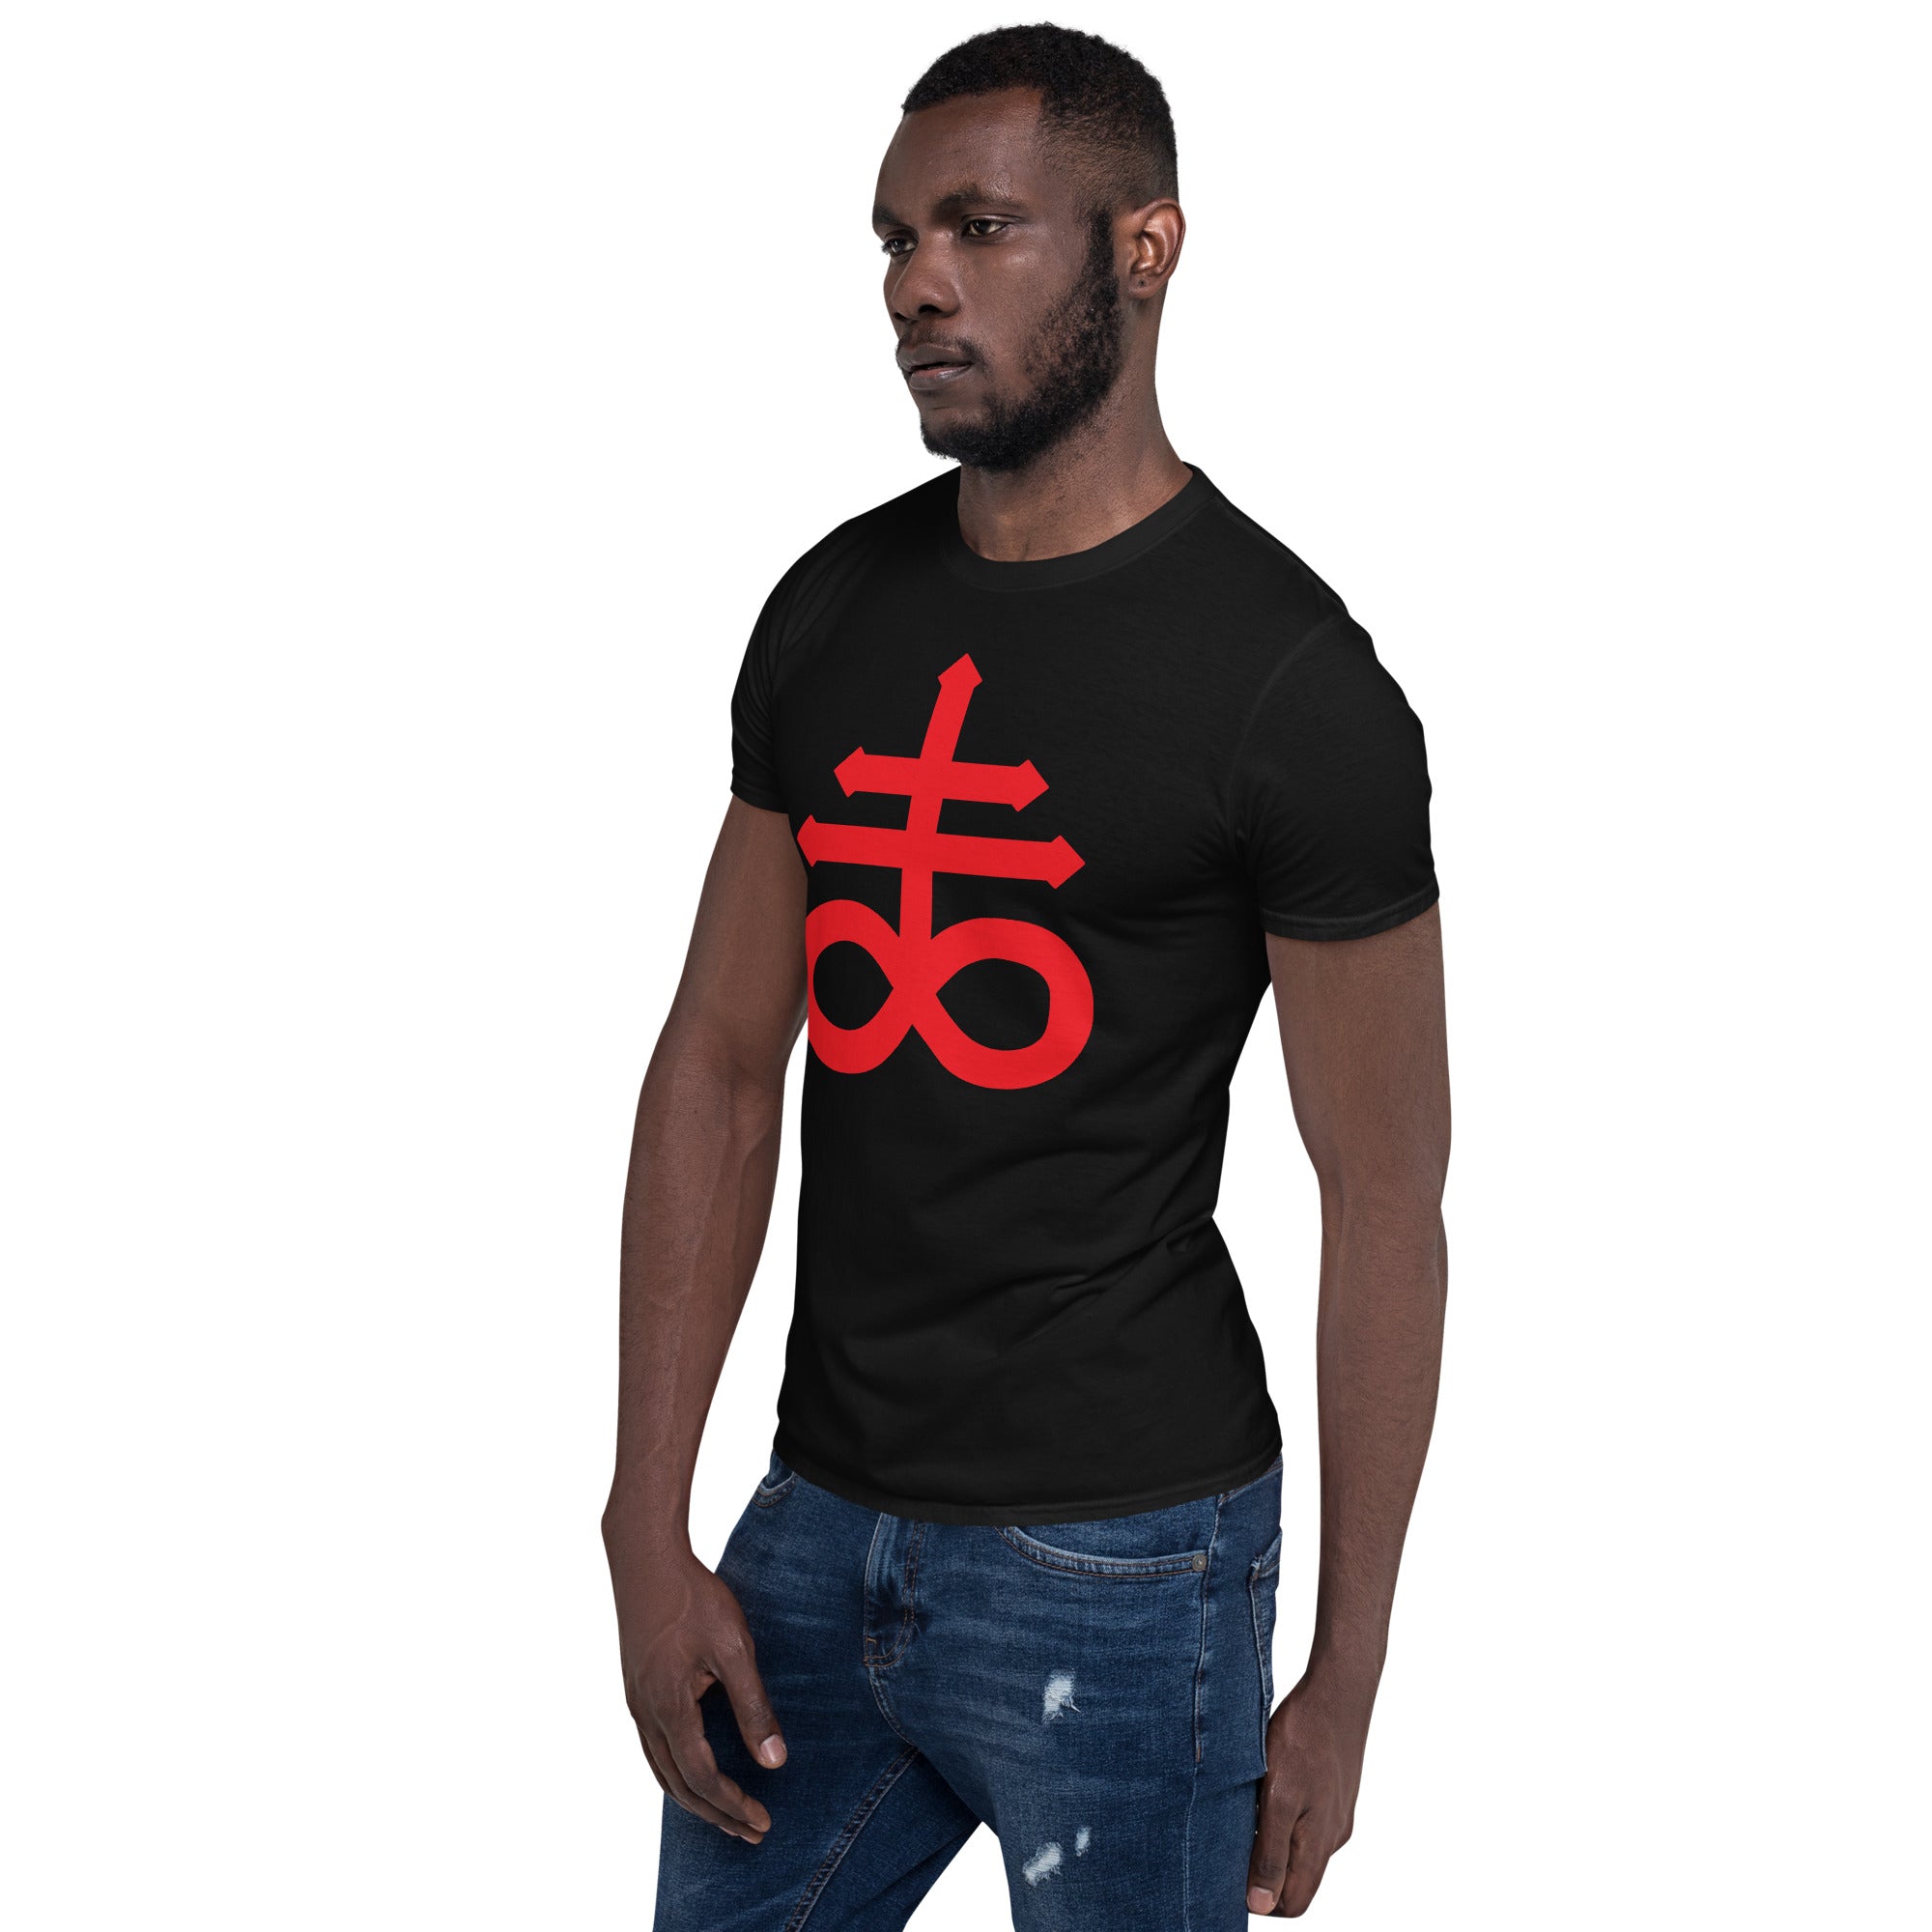 The Leviathan Cross of Satan Occult Symbol Men's Short Sleeve T-Shirt Red Print - Edge of Life Designs